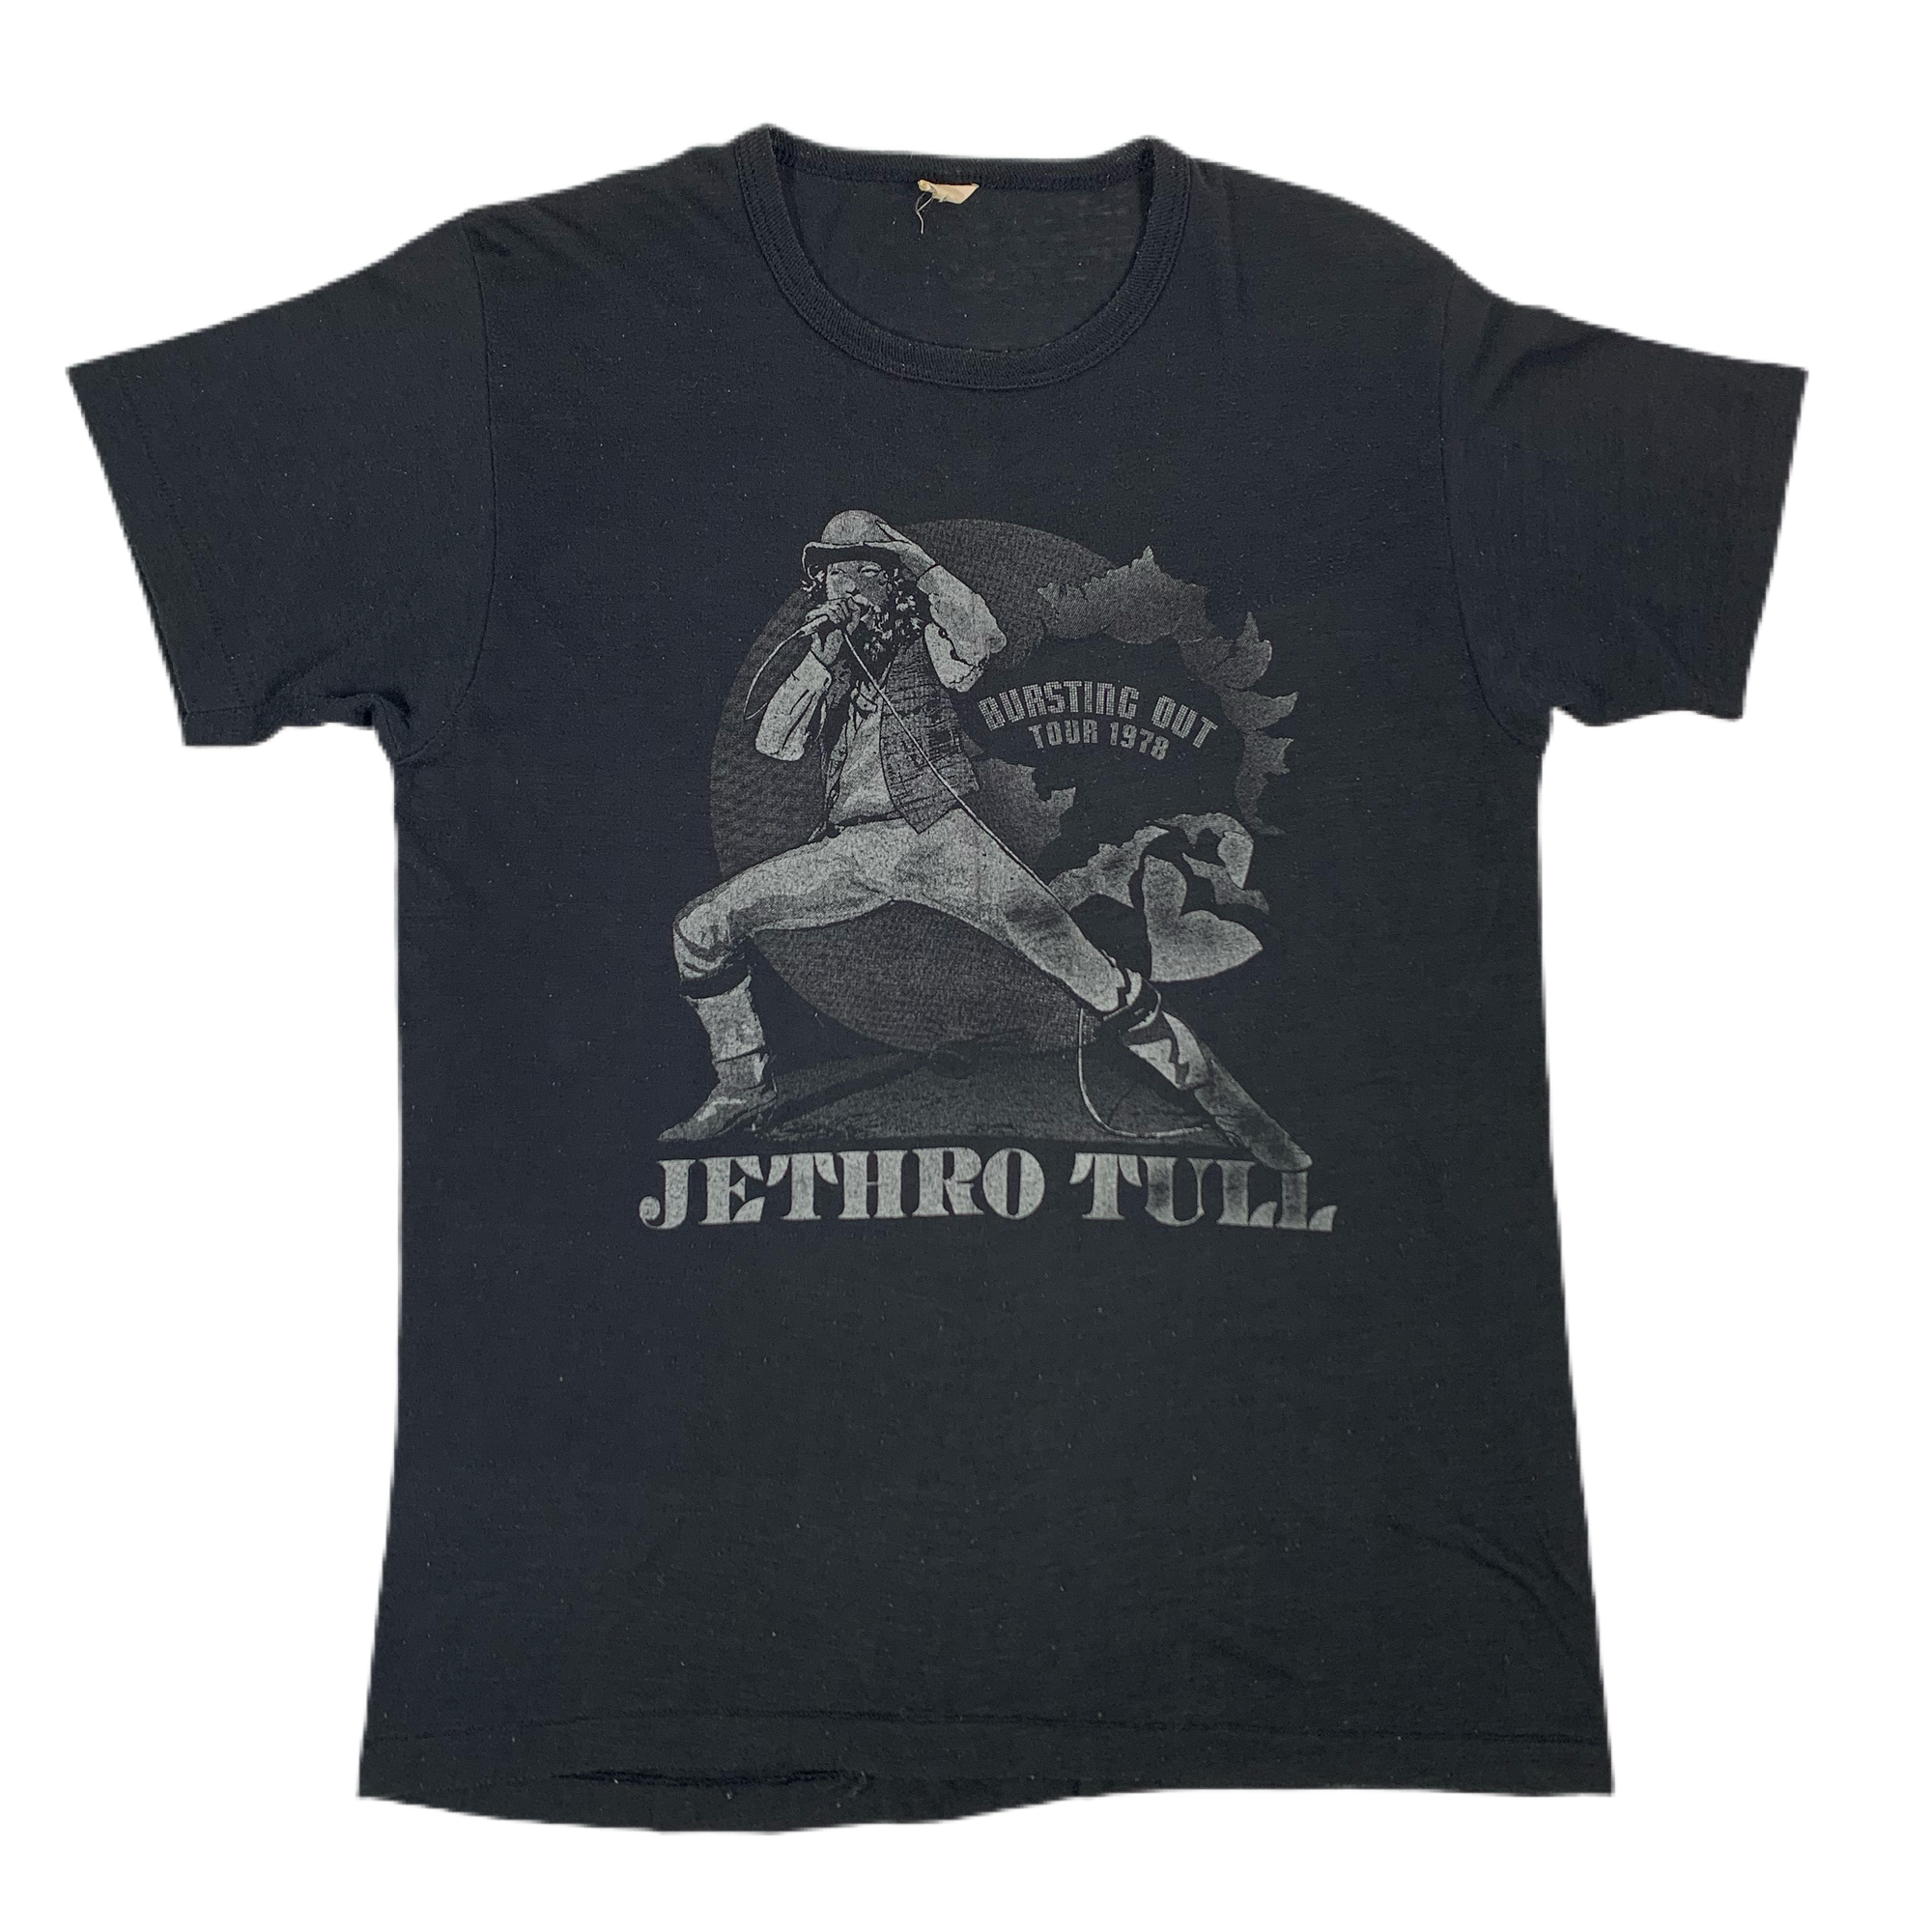 Vintage Jethro Tull “Bursting Out” Tour T-Shirt - jointcustodydc